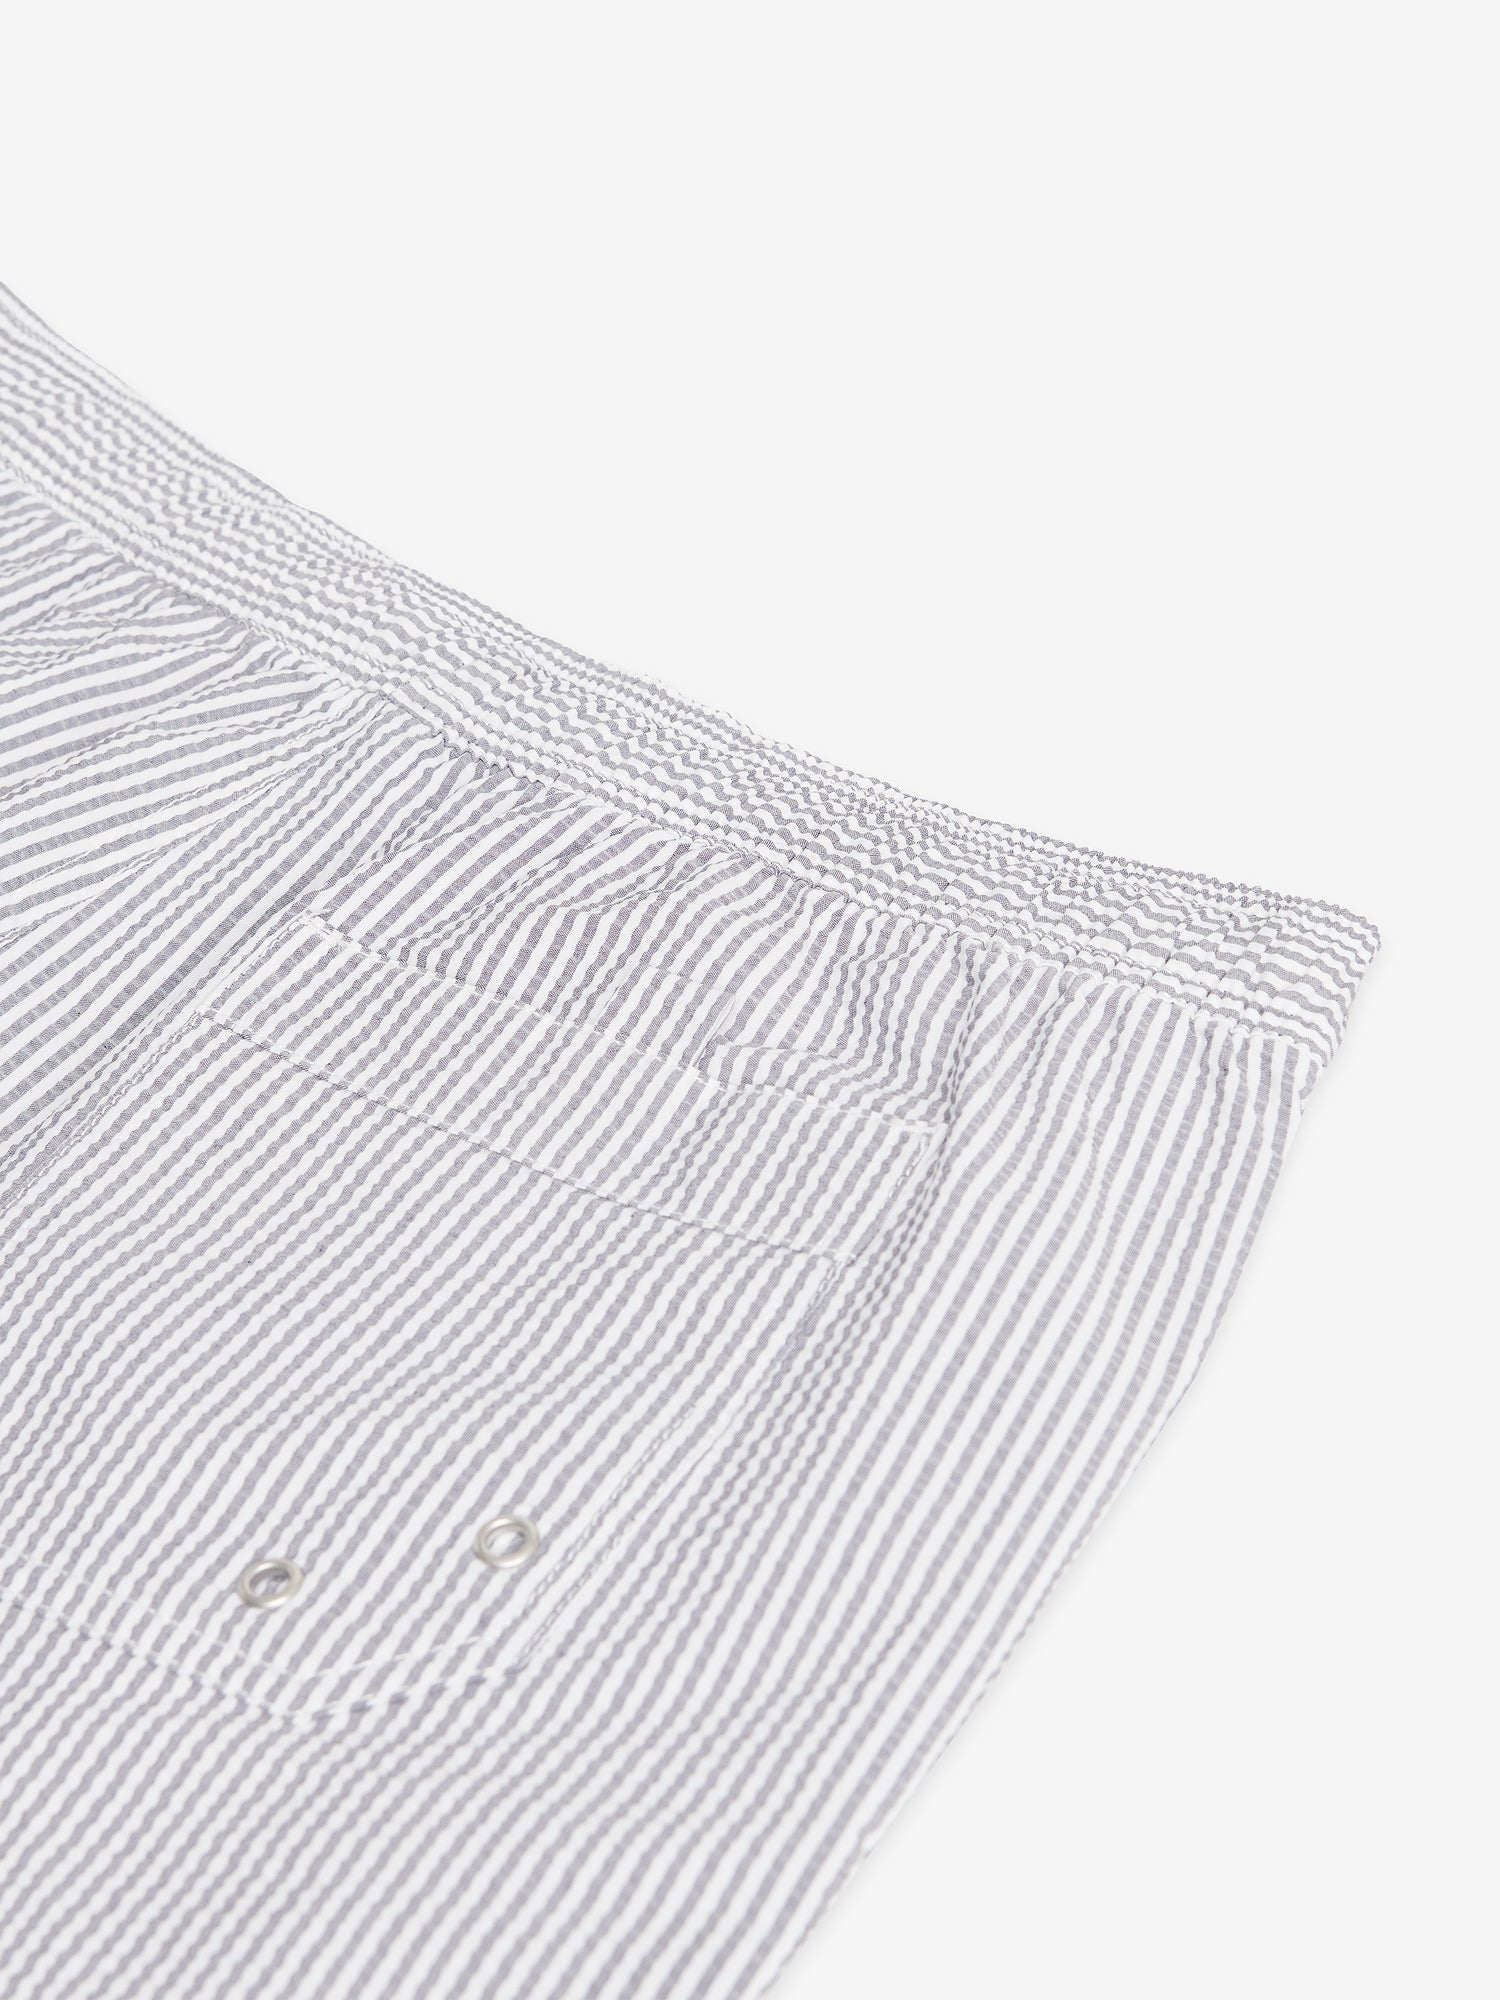 Venice Seersucker Cotton-Polyester SW10024-NVY